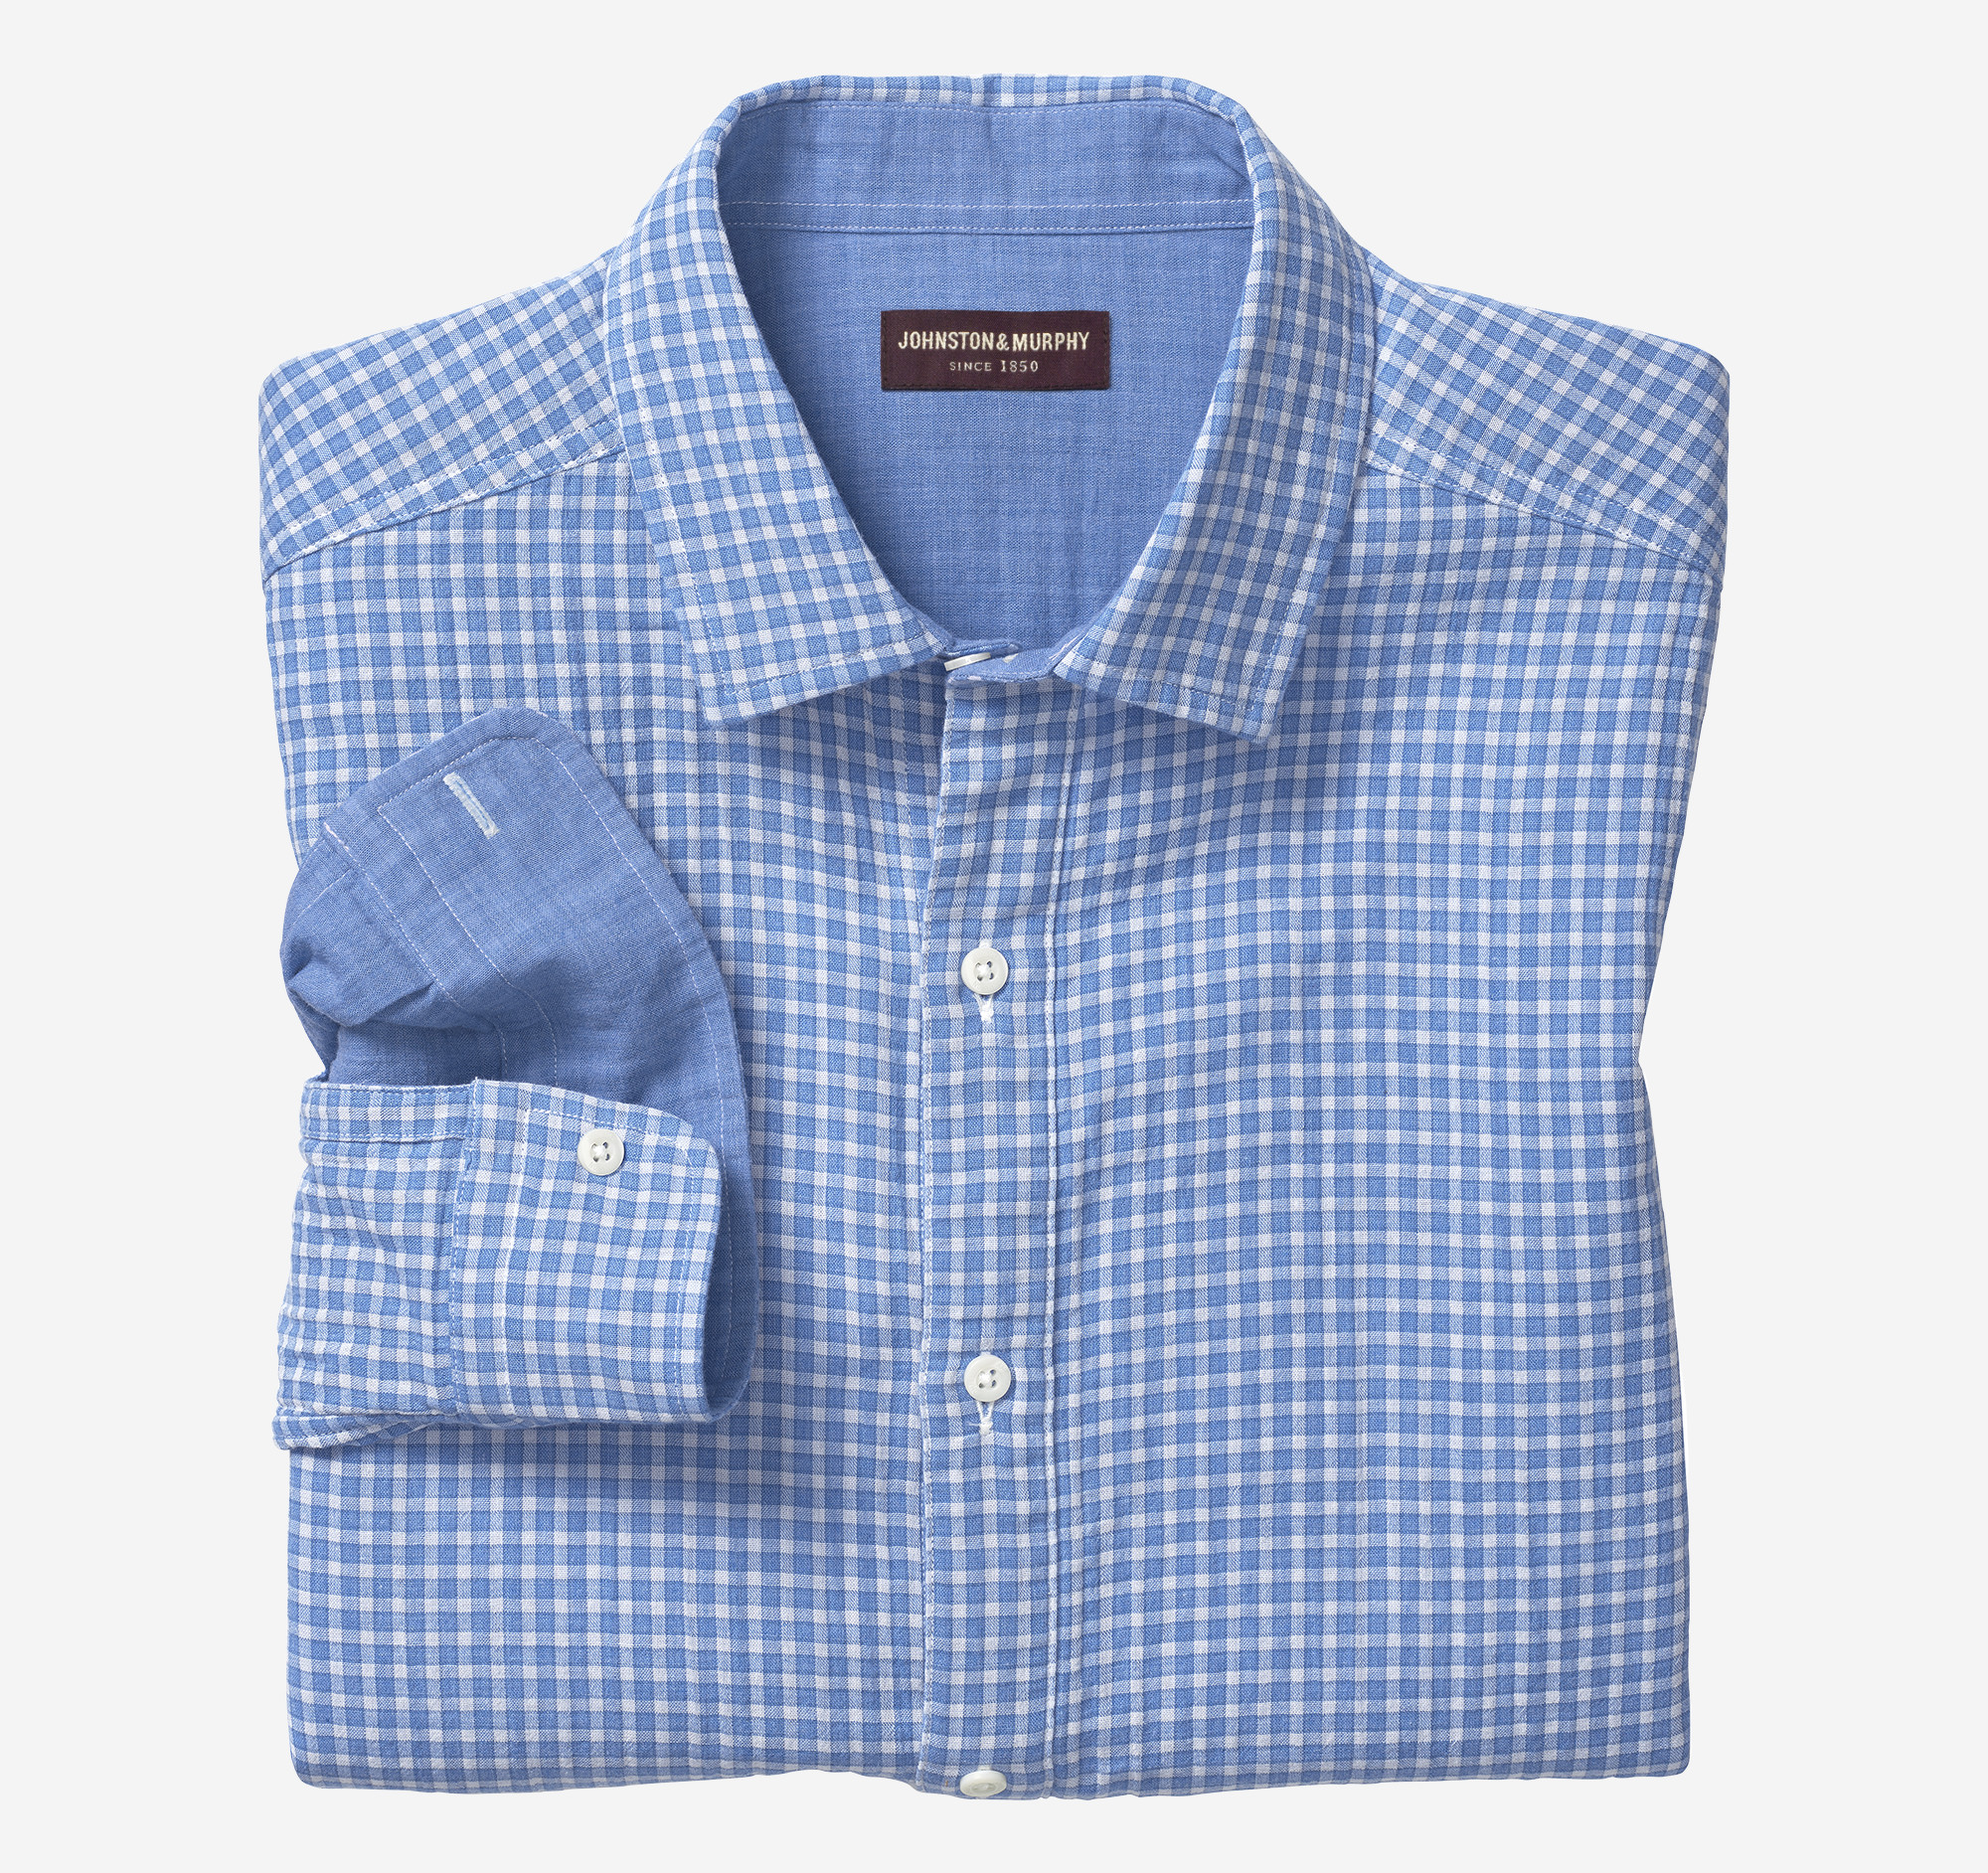 Image of Johnston & Murphy Double-Layer Long-Sleeve Shirt